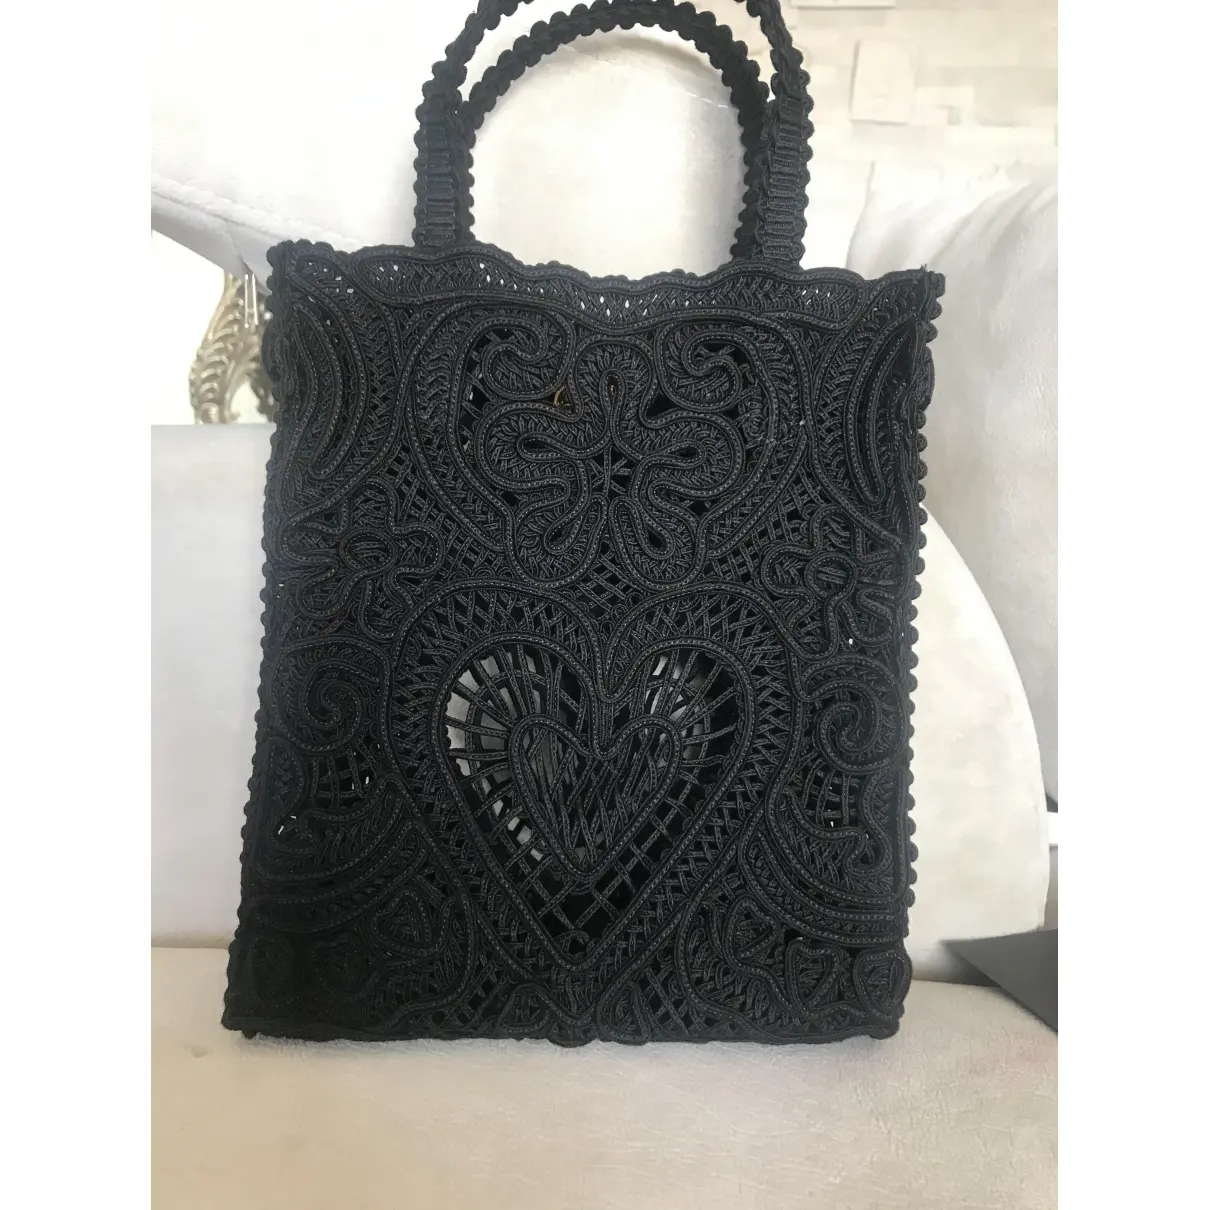 Buy Dolce & Gabbana Lucia handbag online